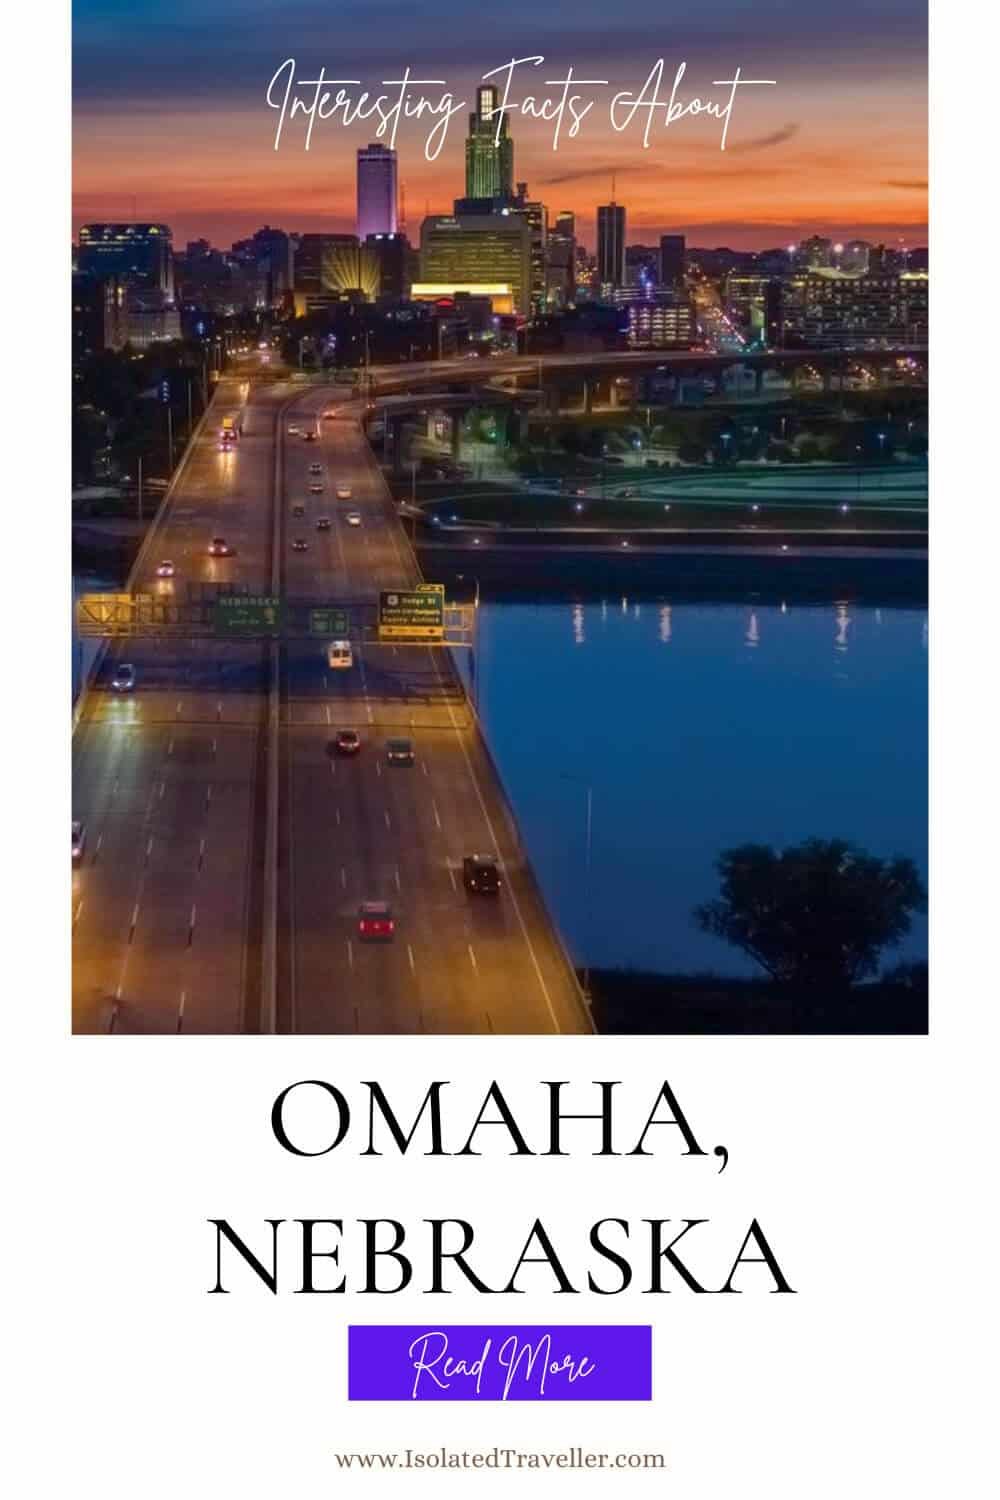 Facts About Omaha, Nebraska